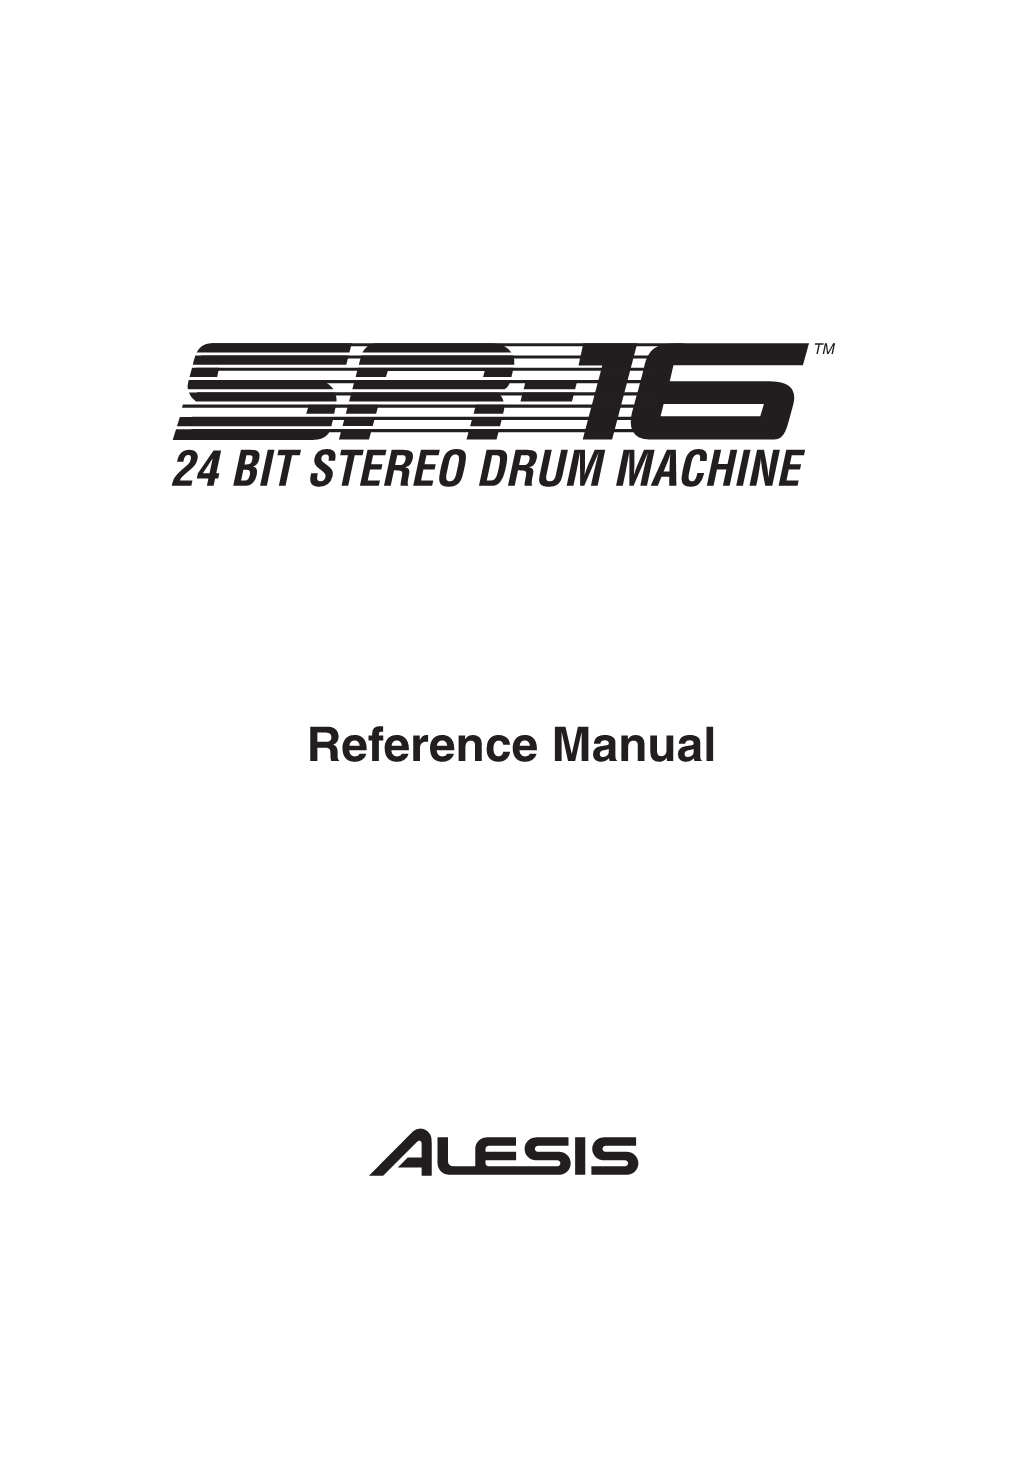 SR-16 Reference Manual